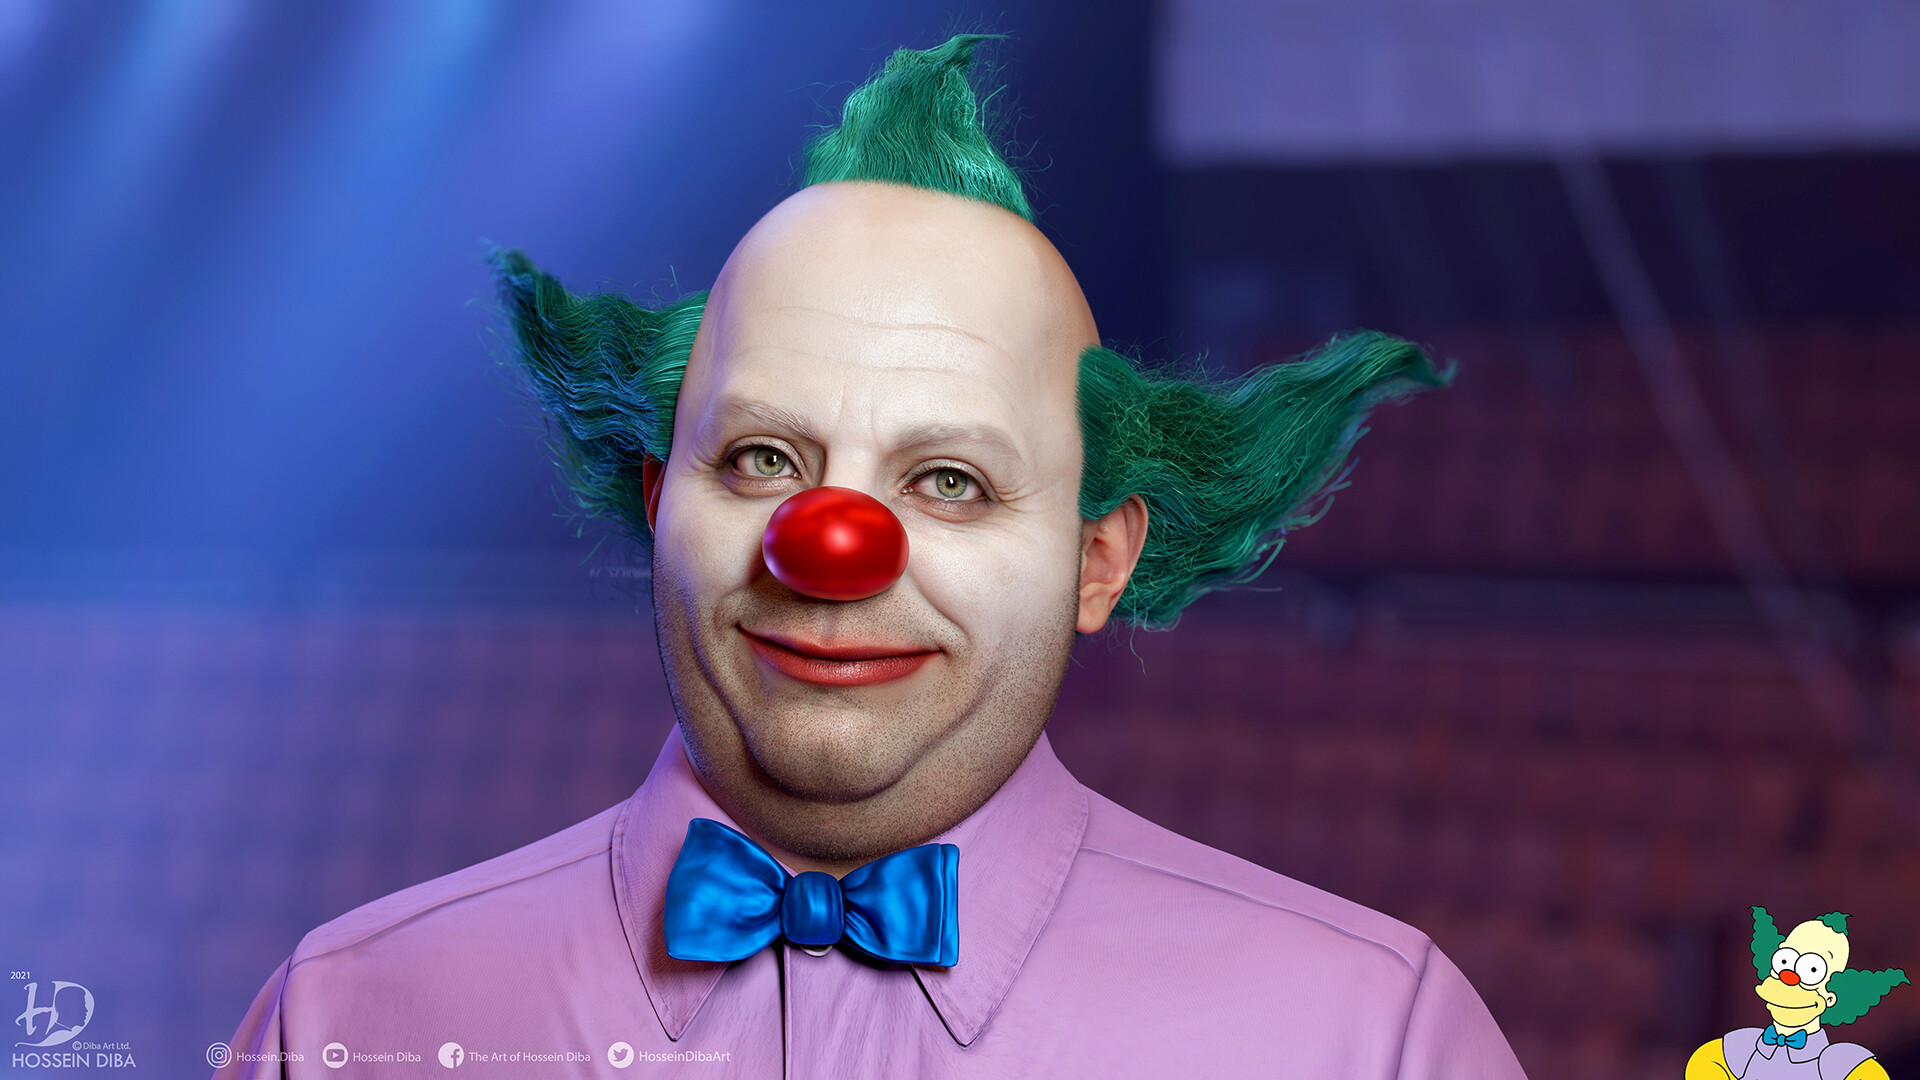 krusty the clown costume